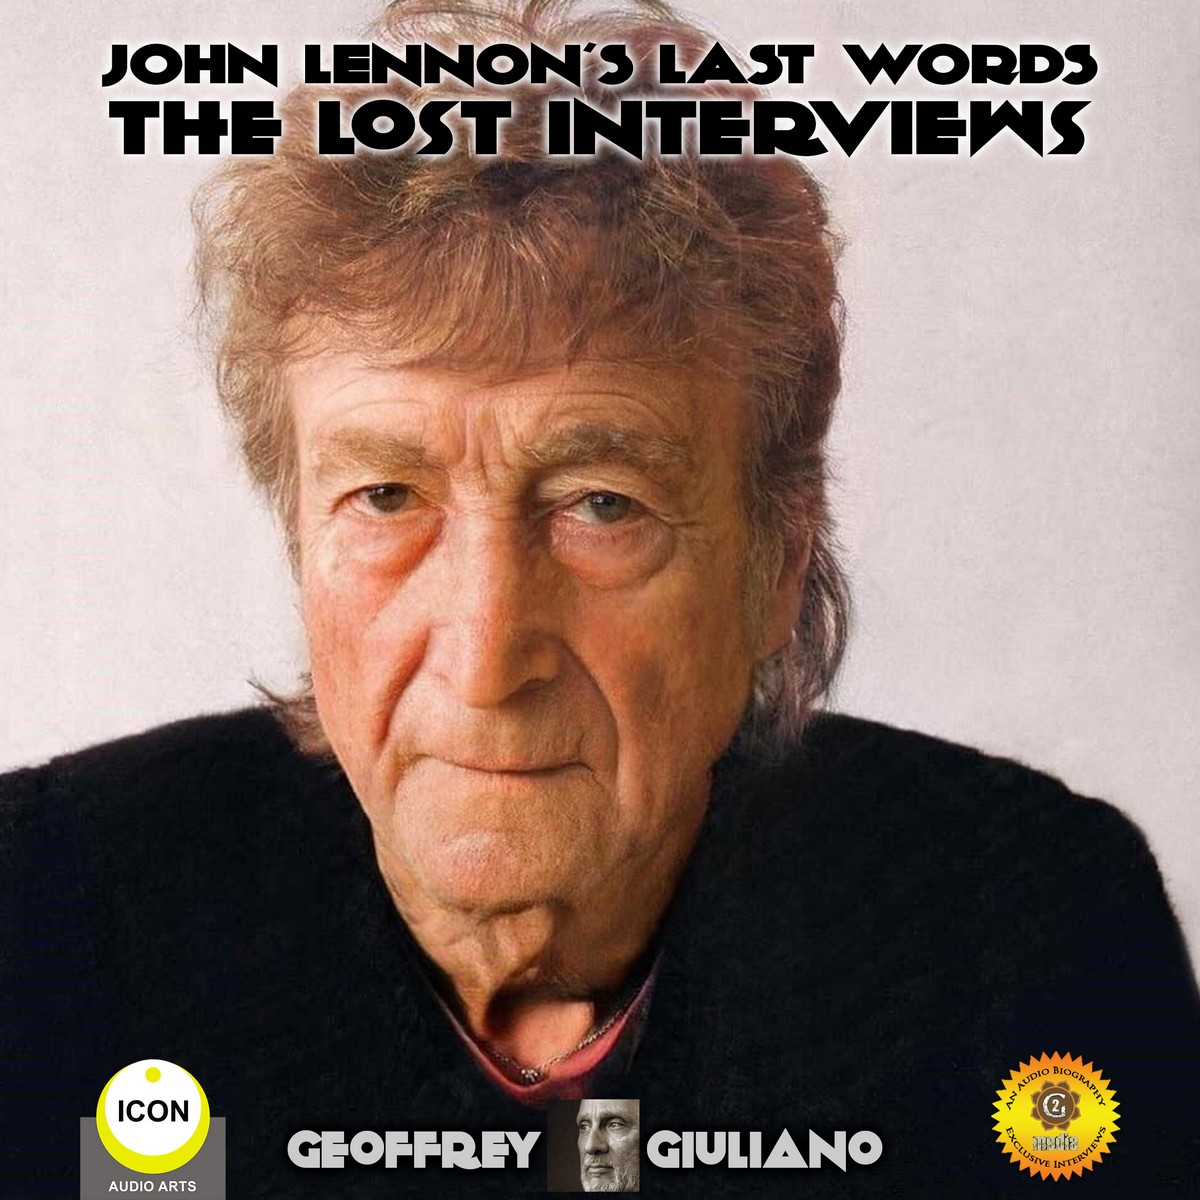 John Lennon’s Last Words The Lost Interviews